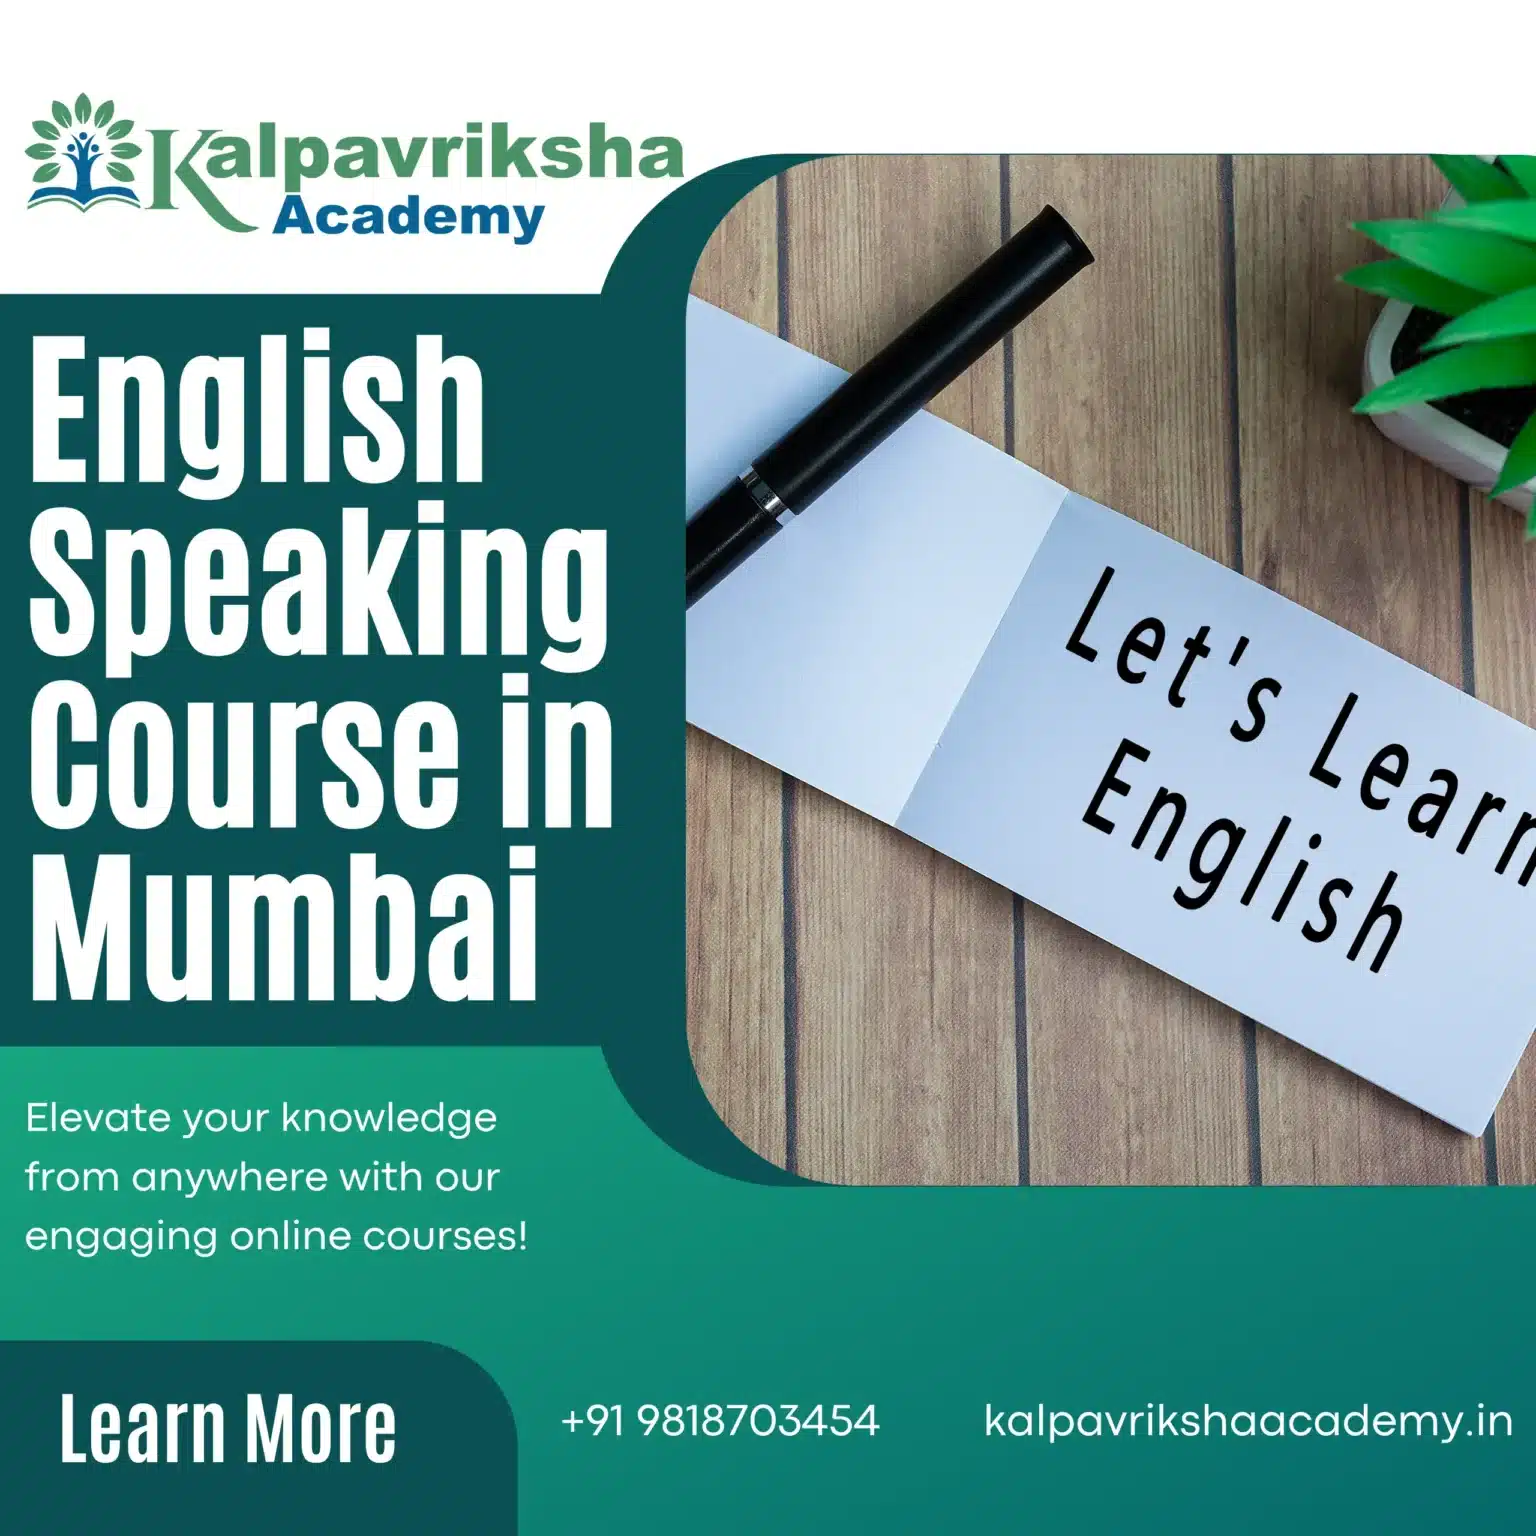 Top English Speaking Course in Mumbai - Kalpavriksha Academy